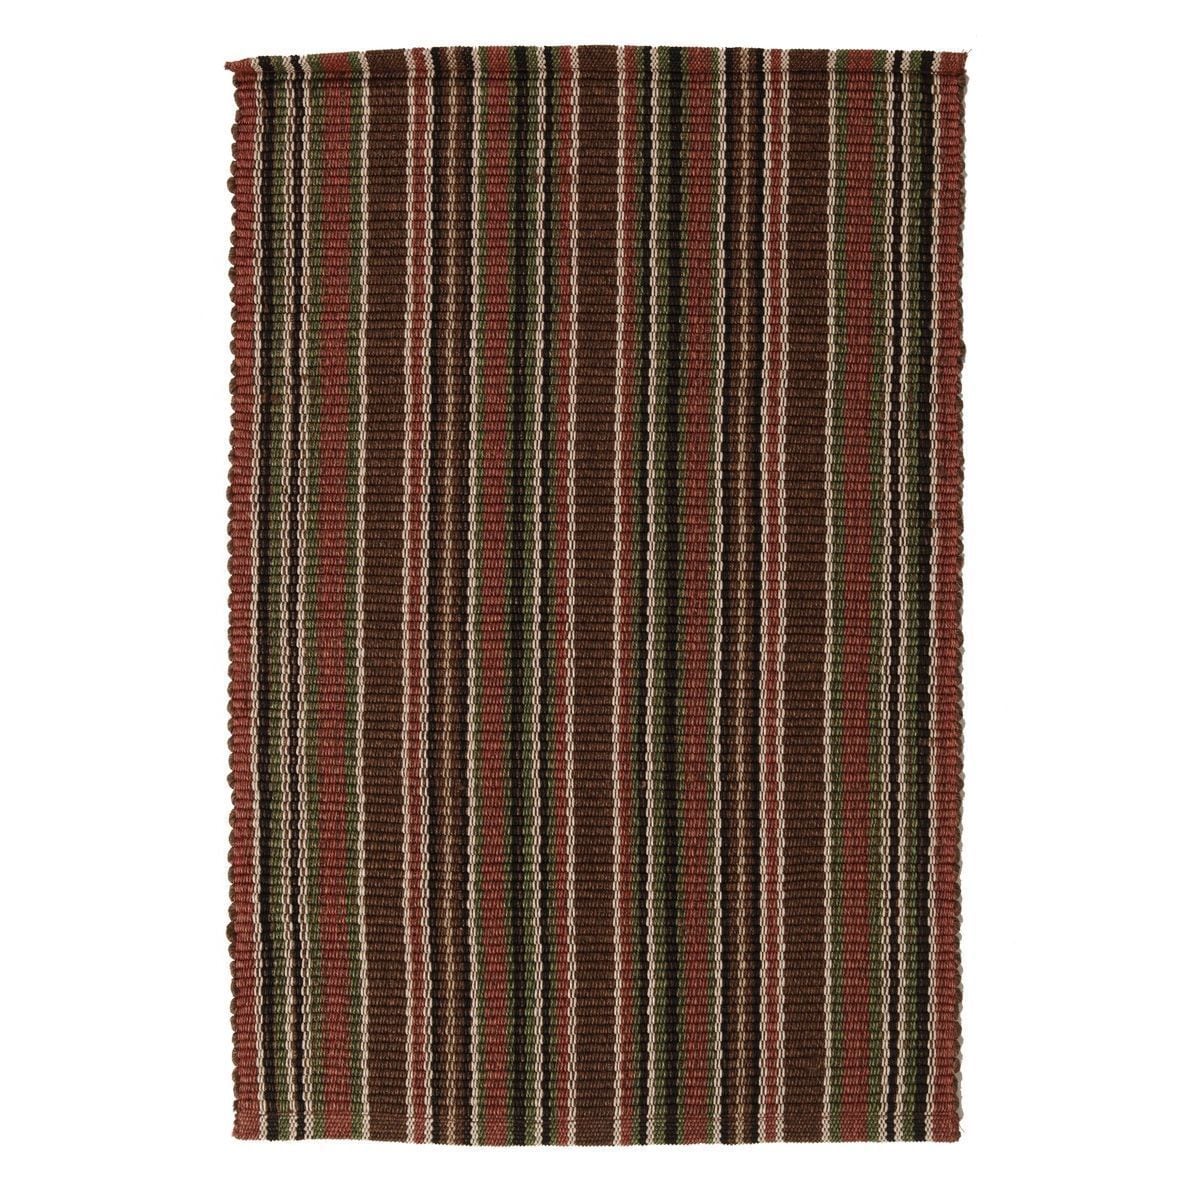  Indoor/ Outdoor Stain proof Striped Rug (26 X 6)